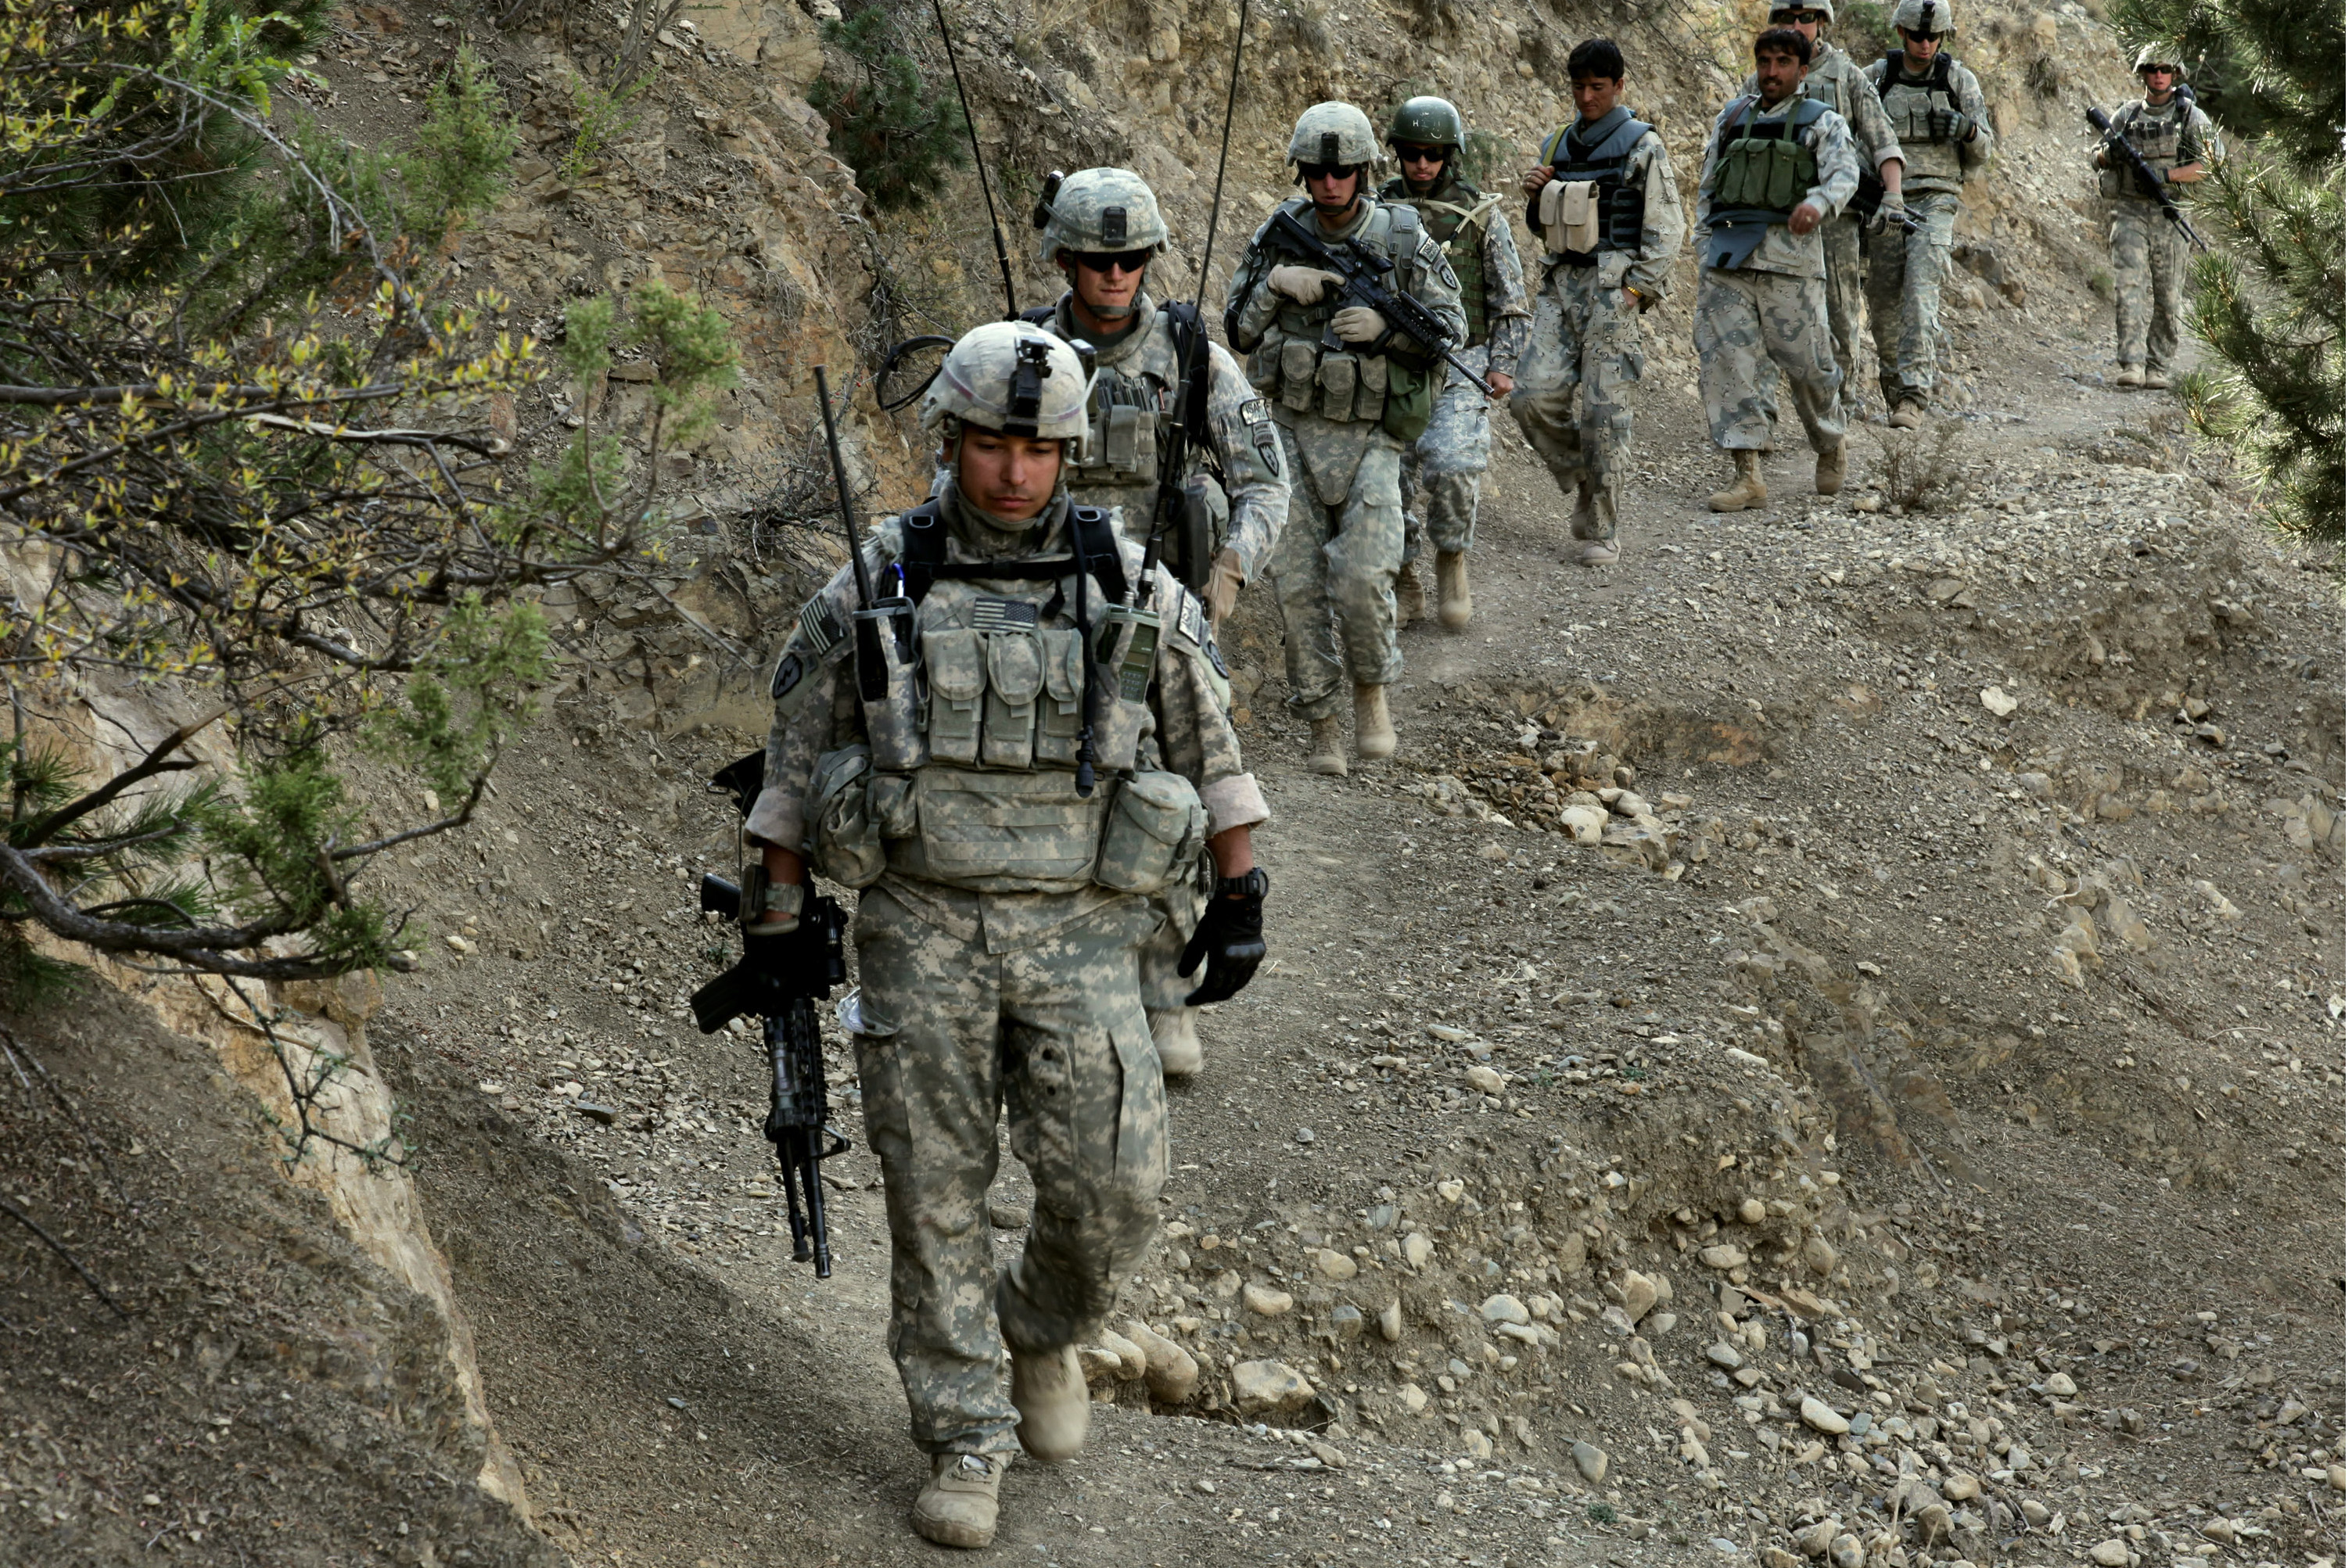 3007x2005 File:Flickr - The U.S. Army - Afghan Border Police in Paktiya province.jpg